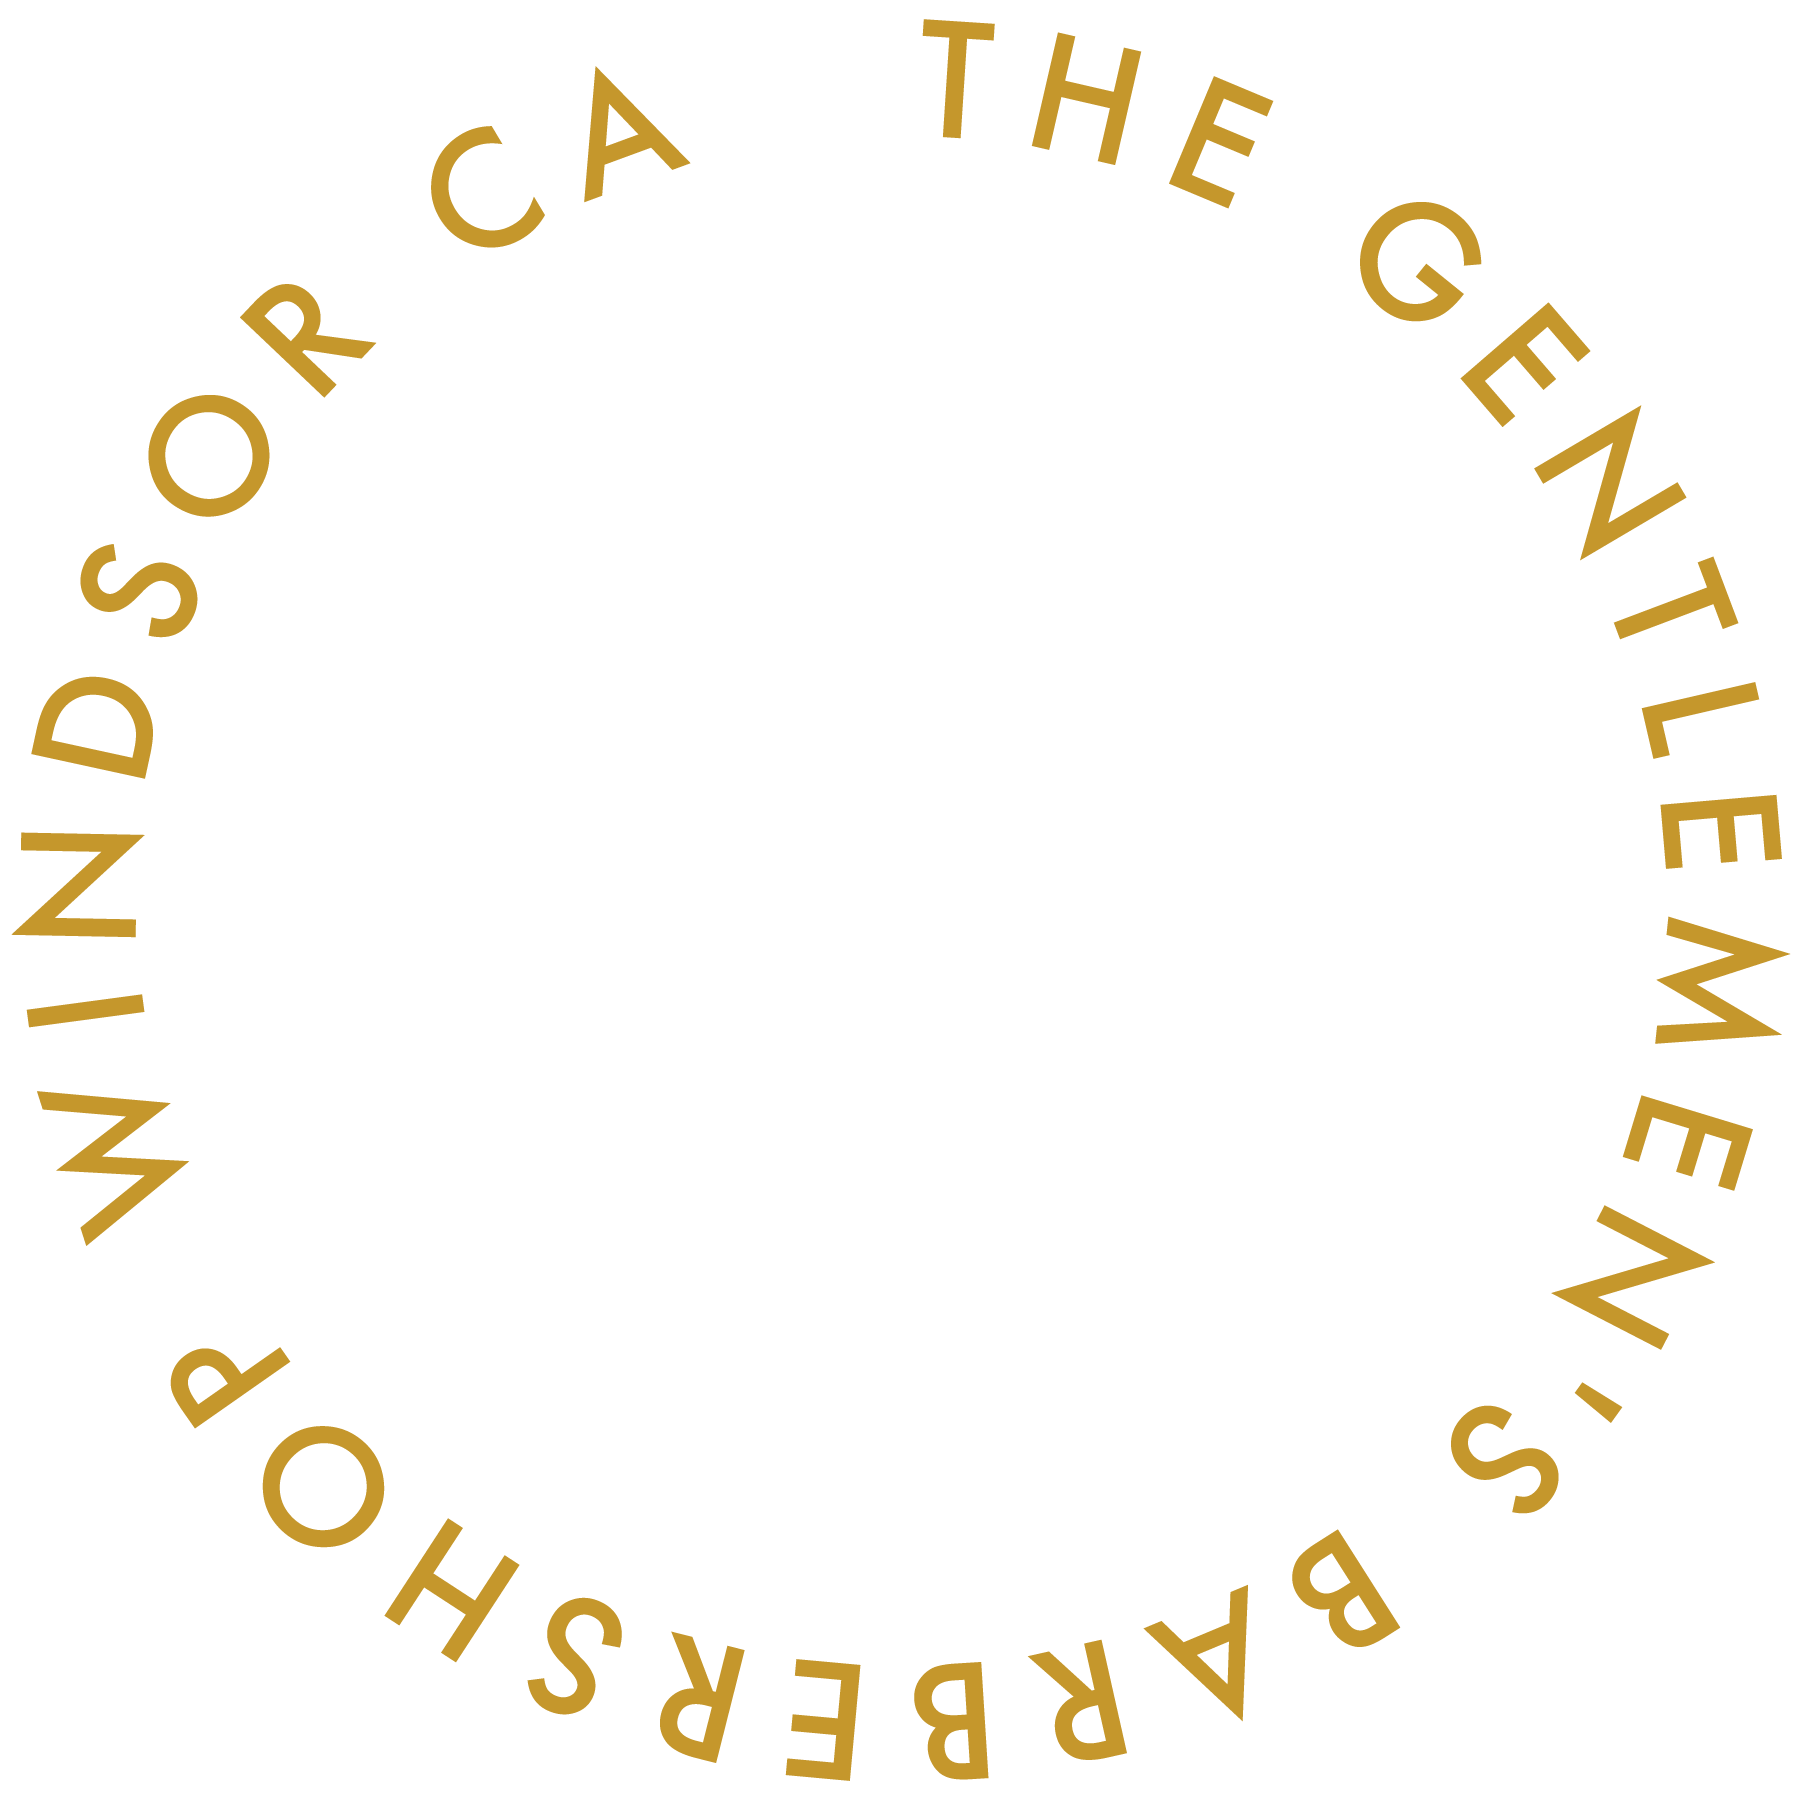 The Gentlemen's Barbershop circle text which wraps around main logo